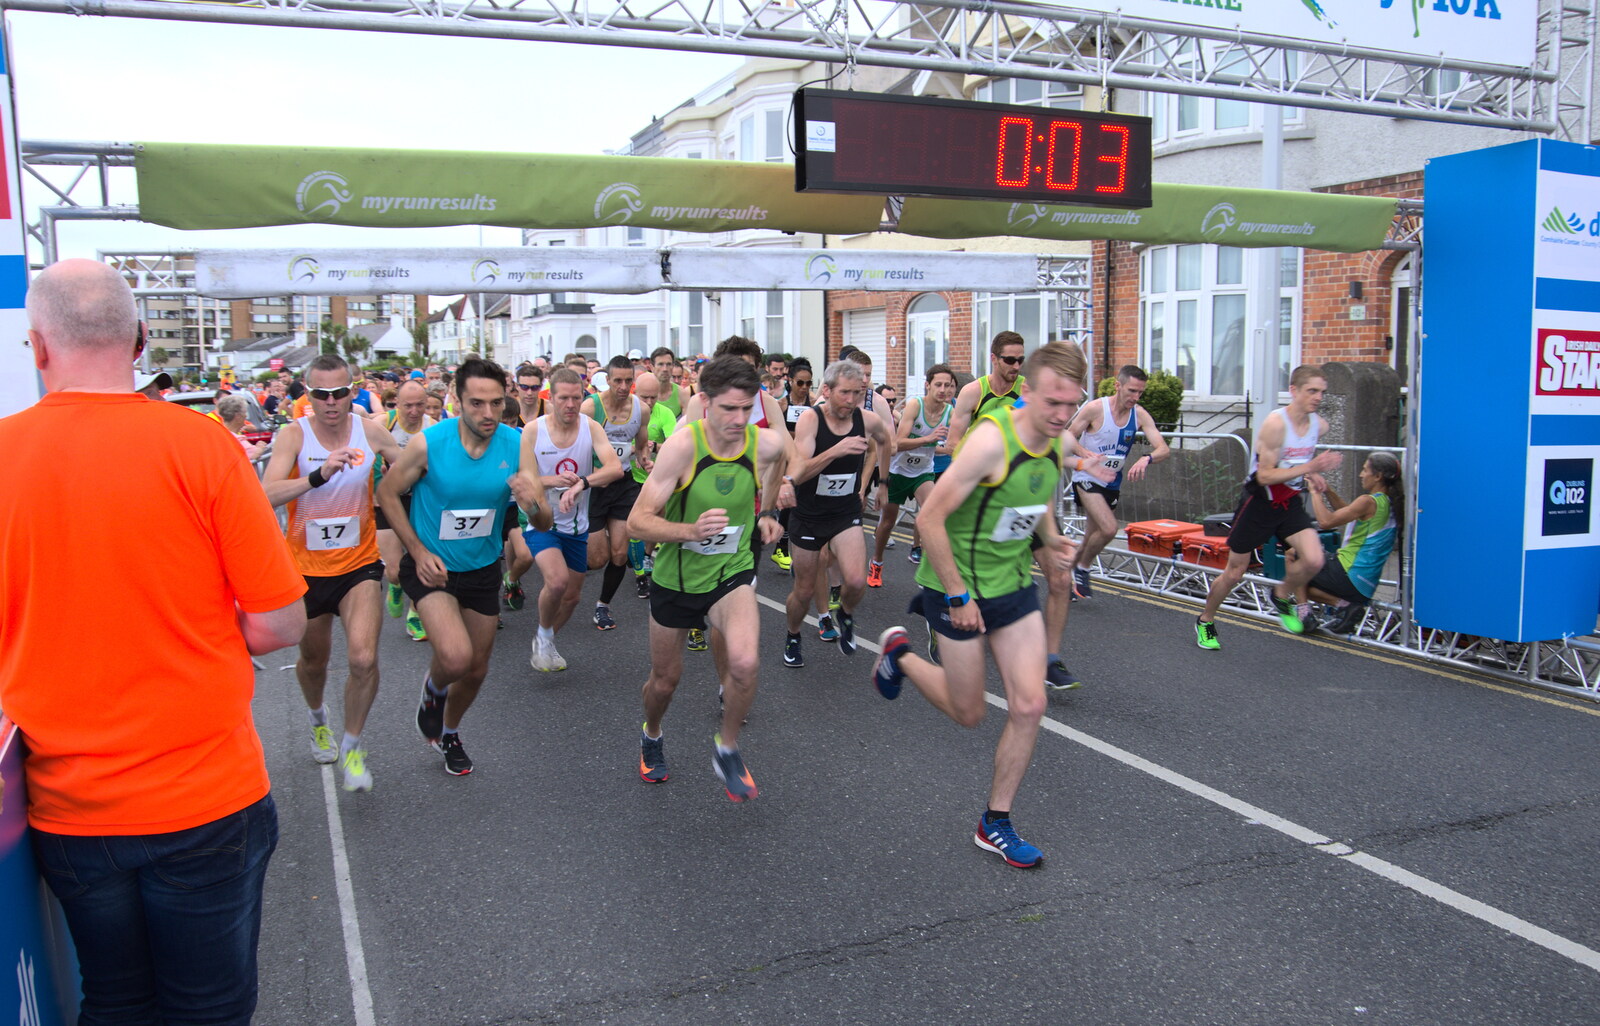 The race commences from The Dún Laoghaire 10k Run, County Dublin, Ireland - 6th August 2018